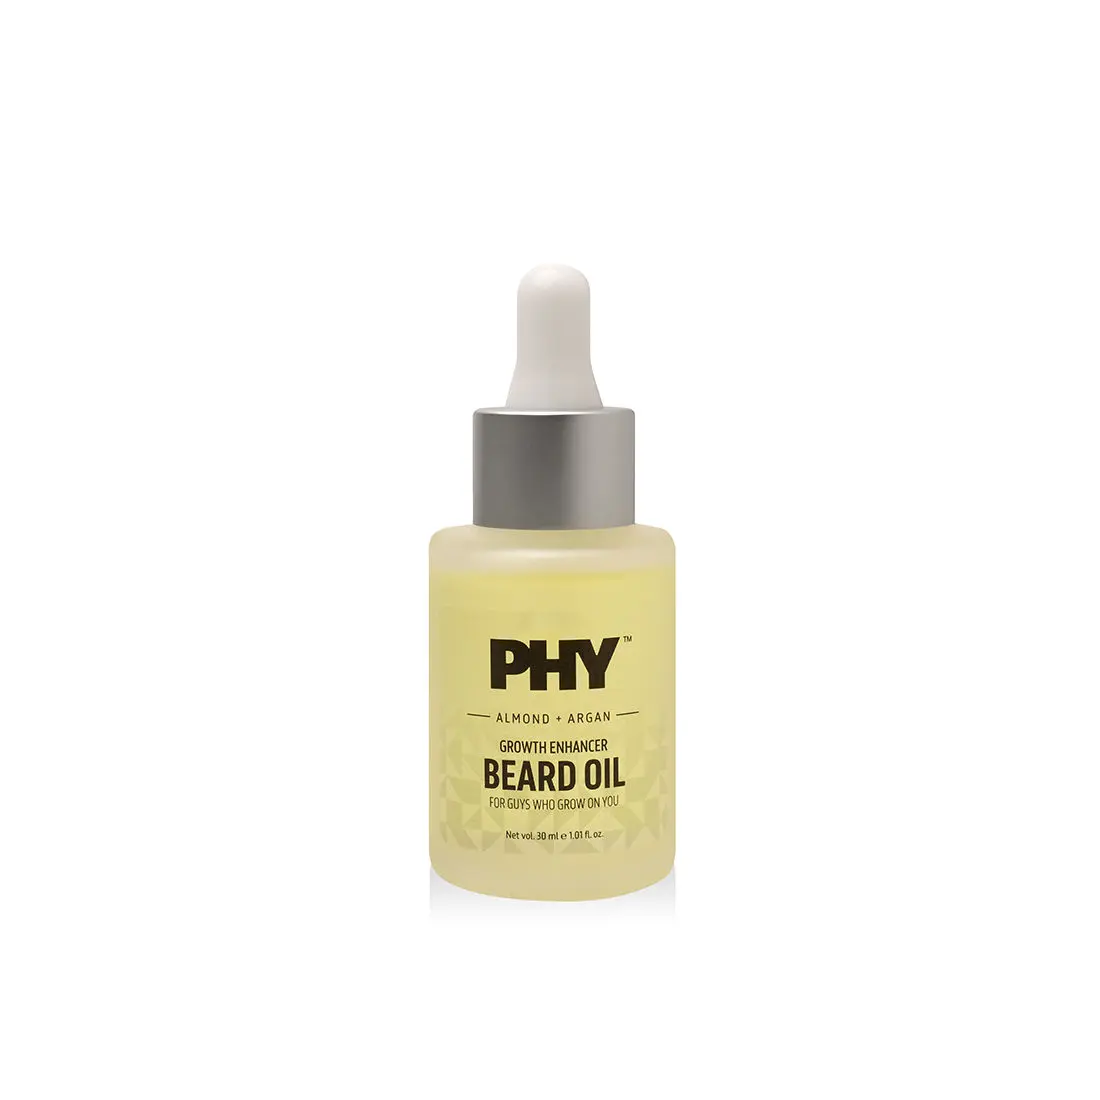 Phy Almond + Argan Beard Oil